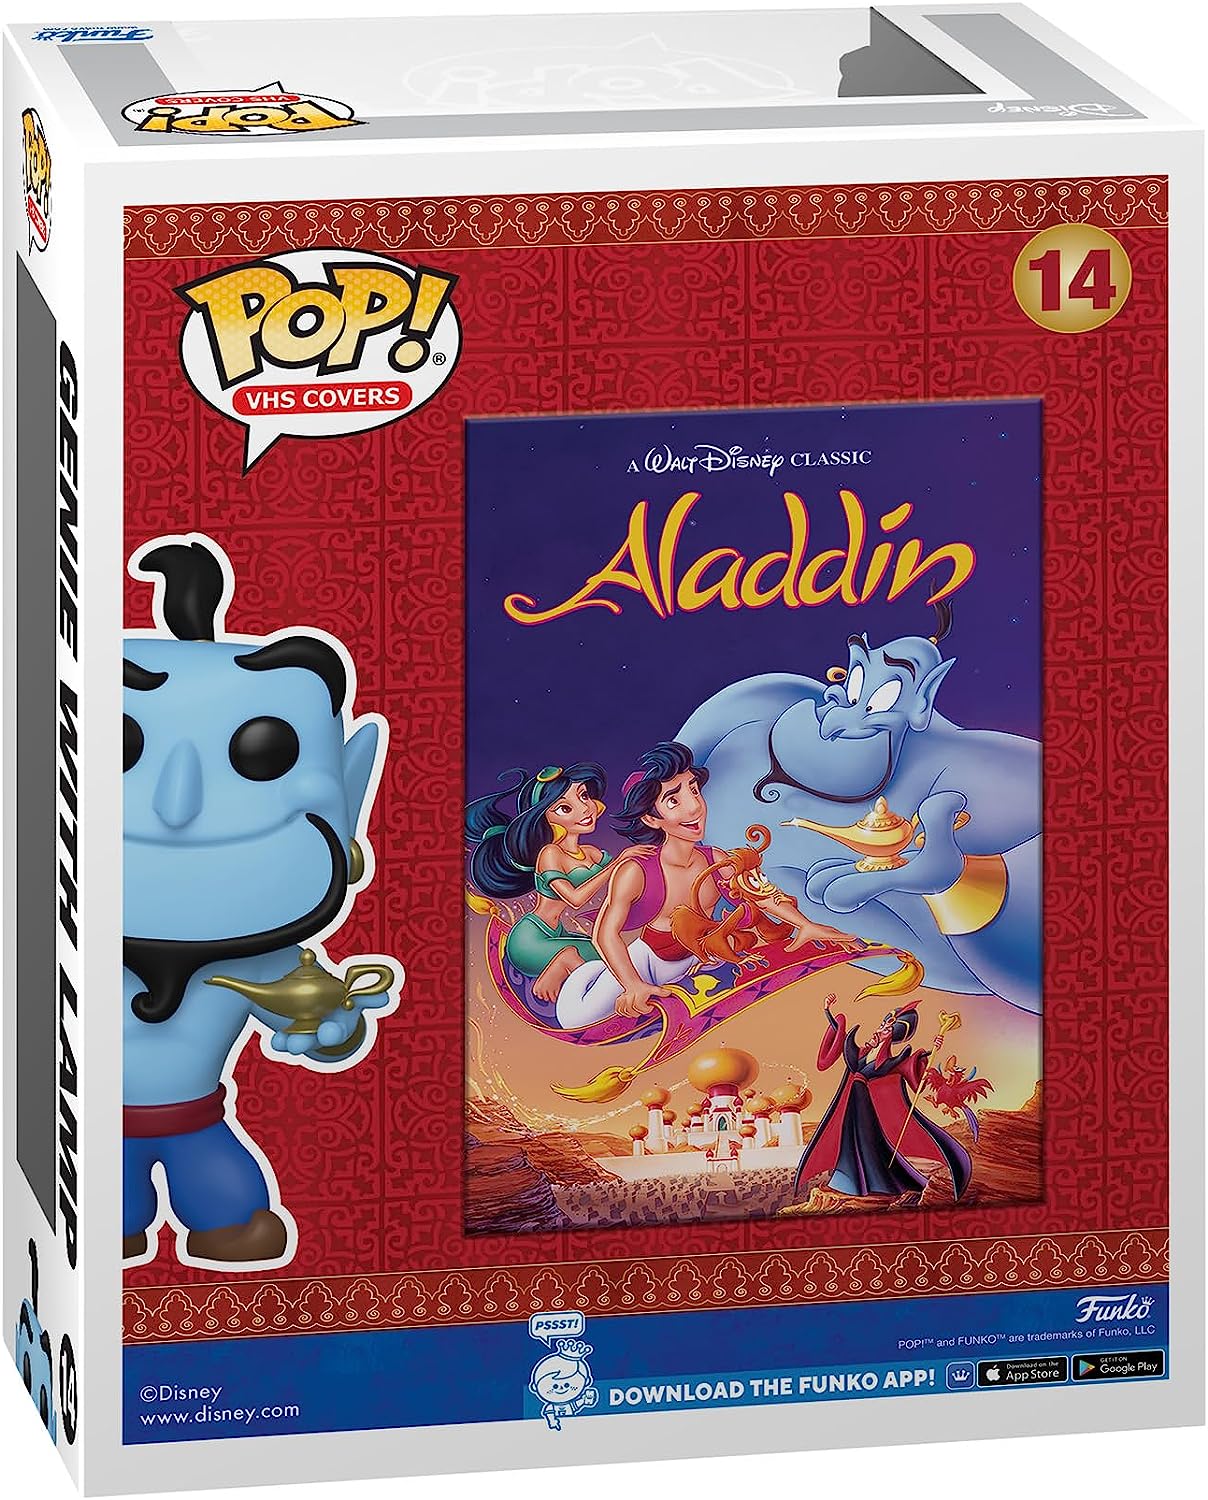 Funko POP! VHS Cover Disney Aladdin 14 Genie with Lamp Amazon 